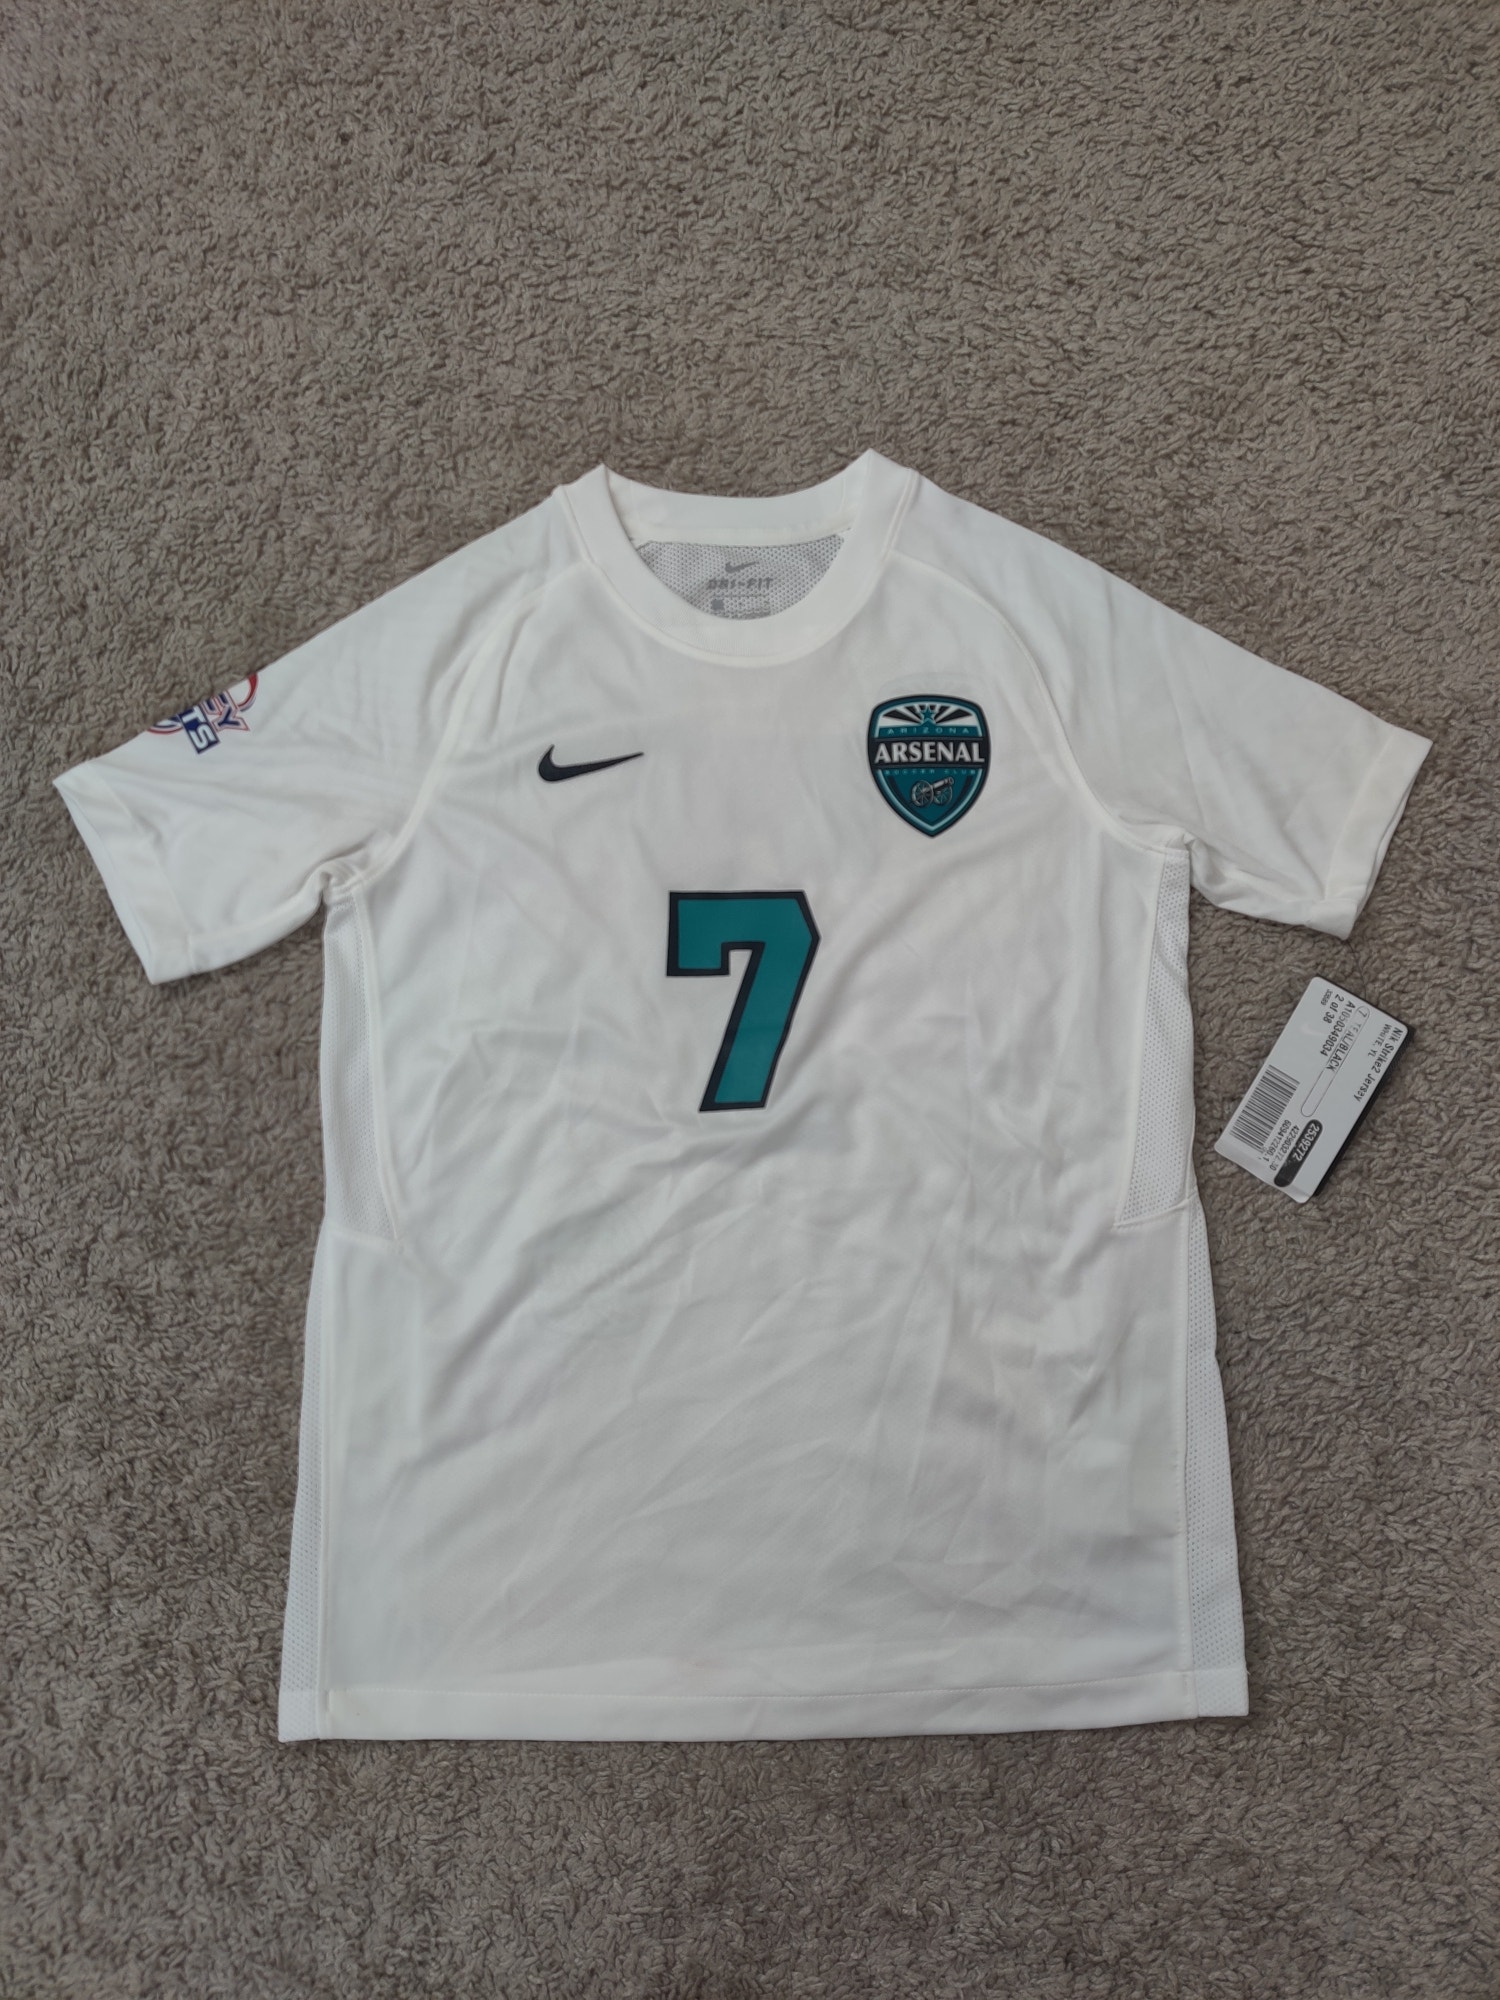 (V) NEW Nike Dri-Fit Youth Arsenal Arizona Soccer Club #7 shirt jersey sz L - Picture 1 of 12